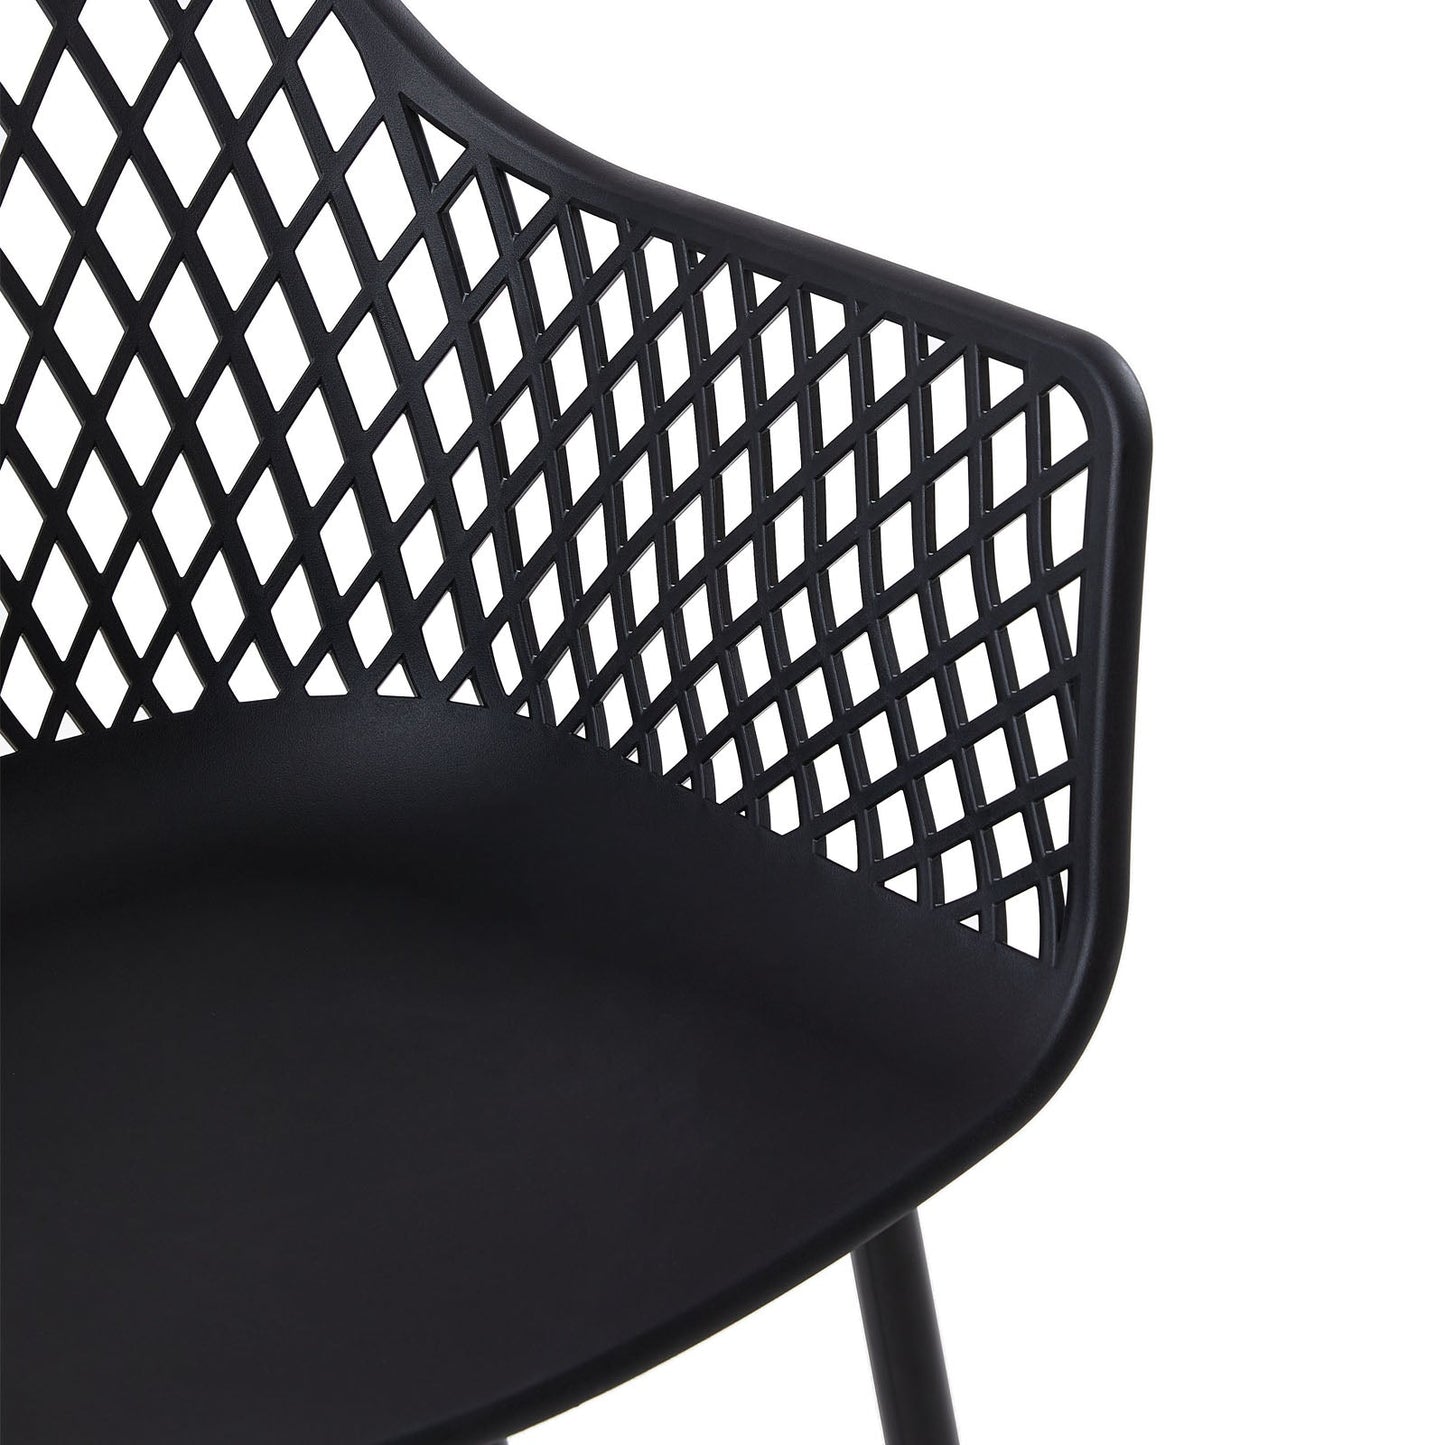 ROME Hollow Arm Chair (Set of 6) - Black/White